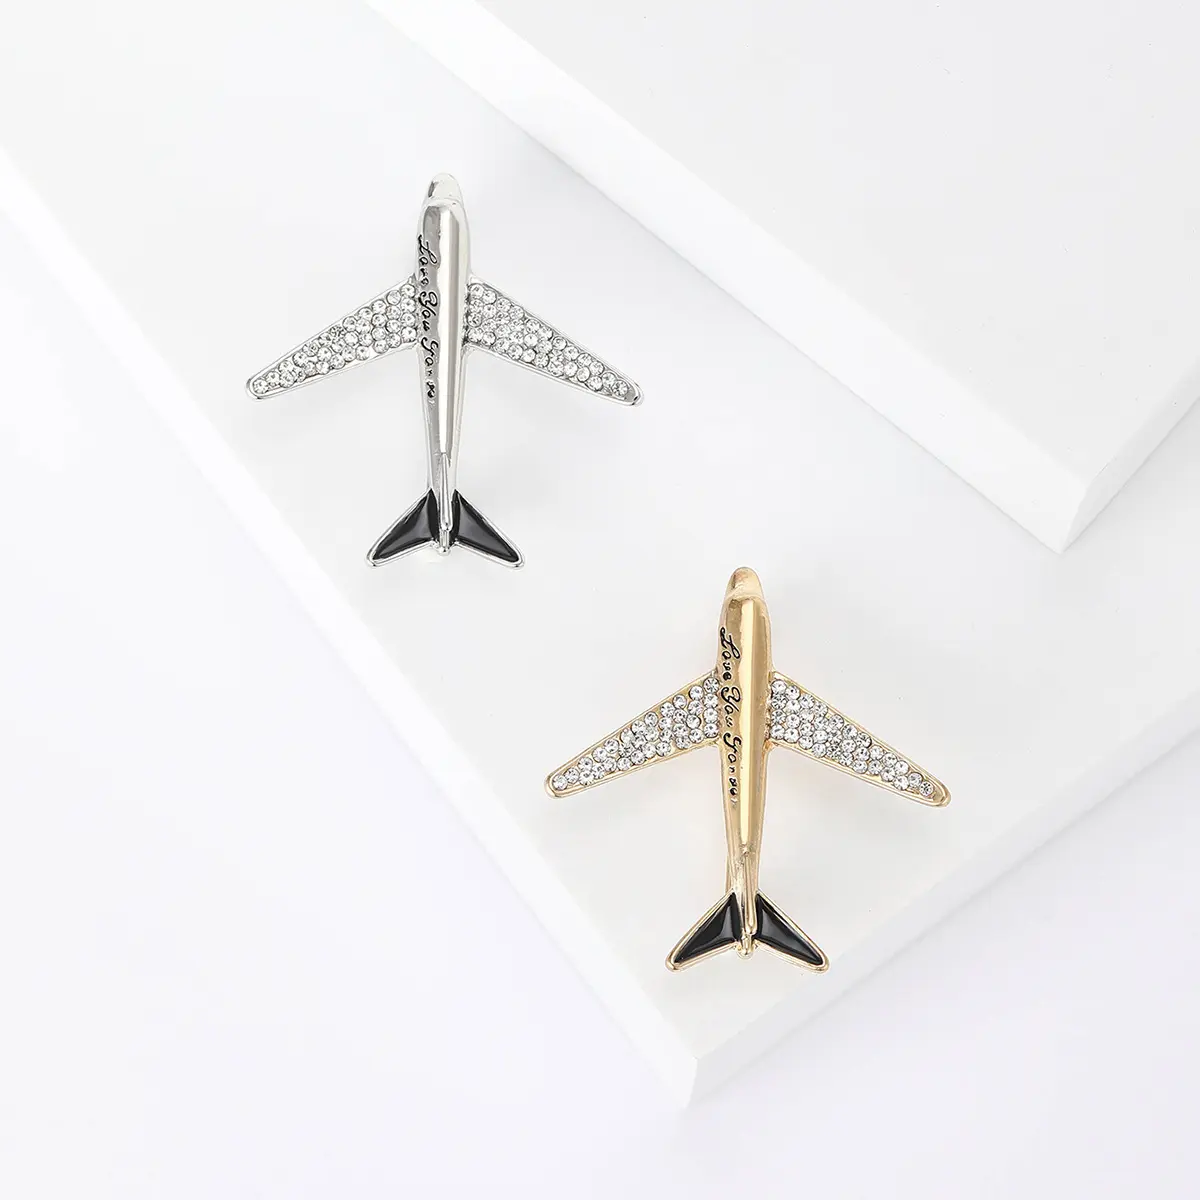 Fashion Crystal Airplane Brooch Aircraft Brooch Pin Enamel Aircraft Lapel Pin for Backpack Shirt Bag Accessories